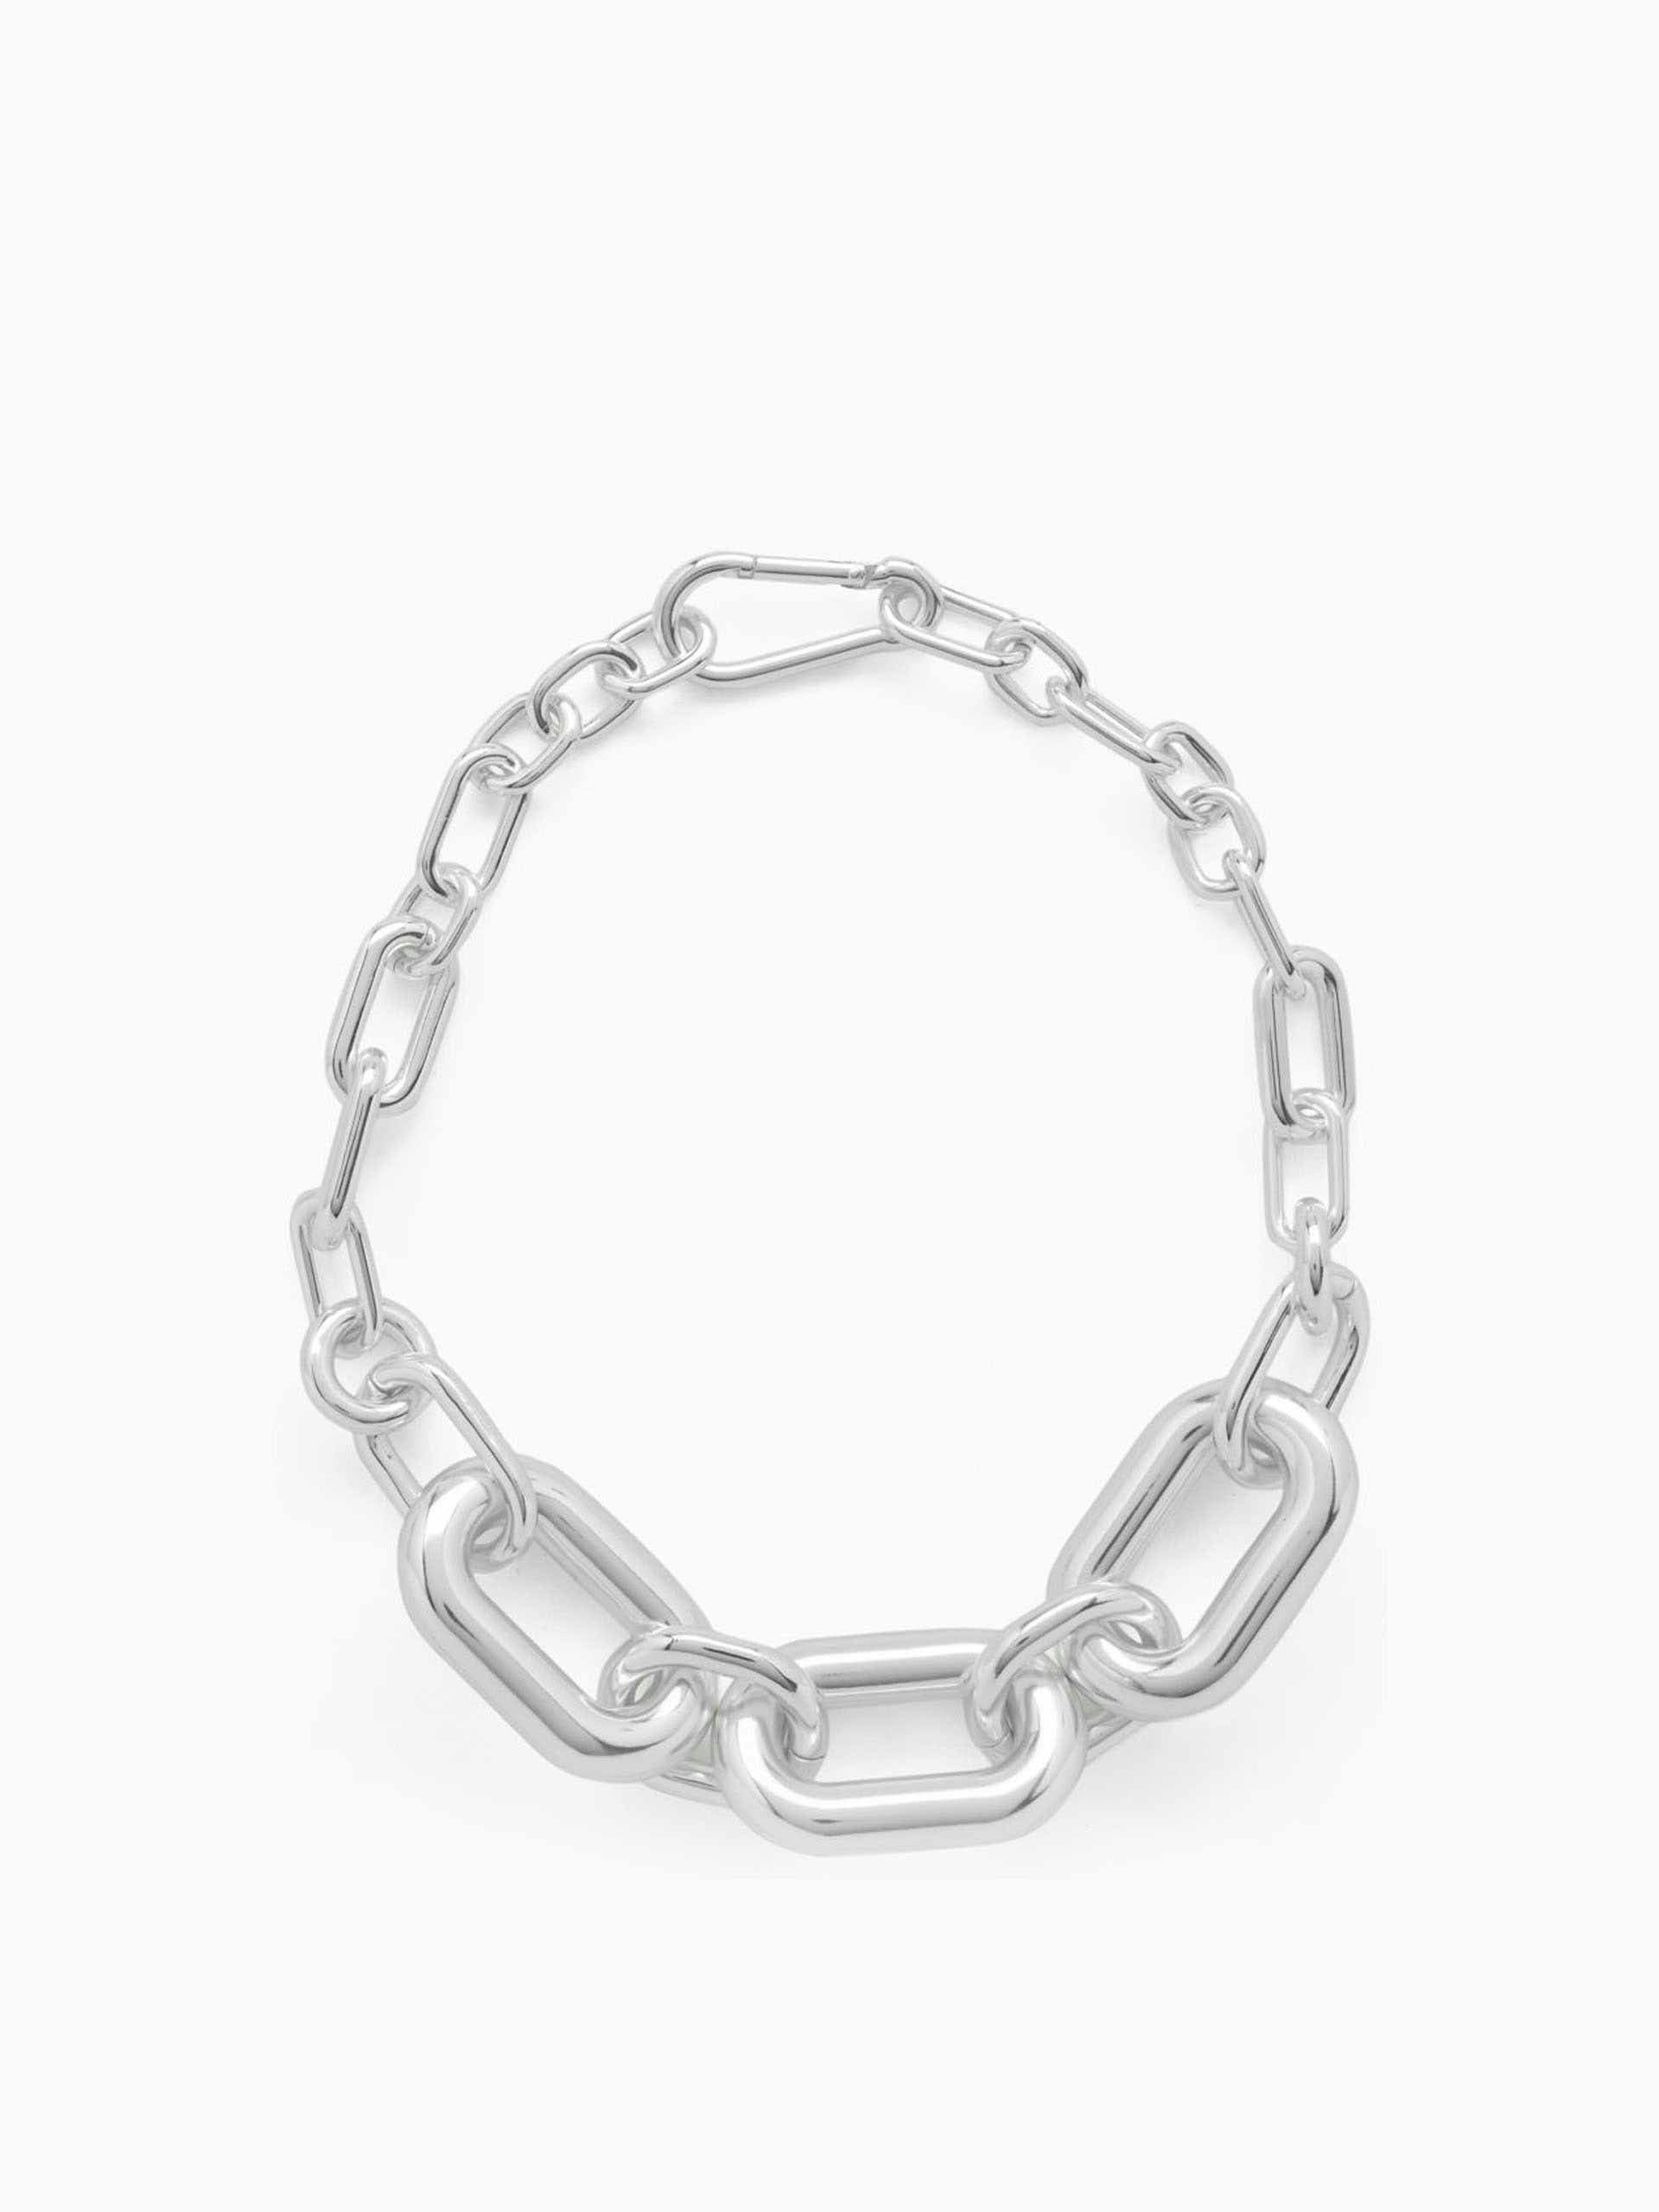 Oversized link necklace